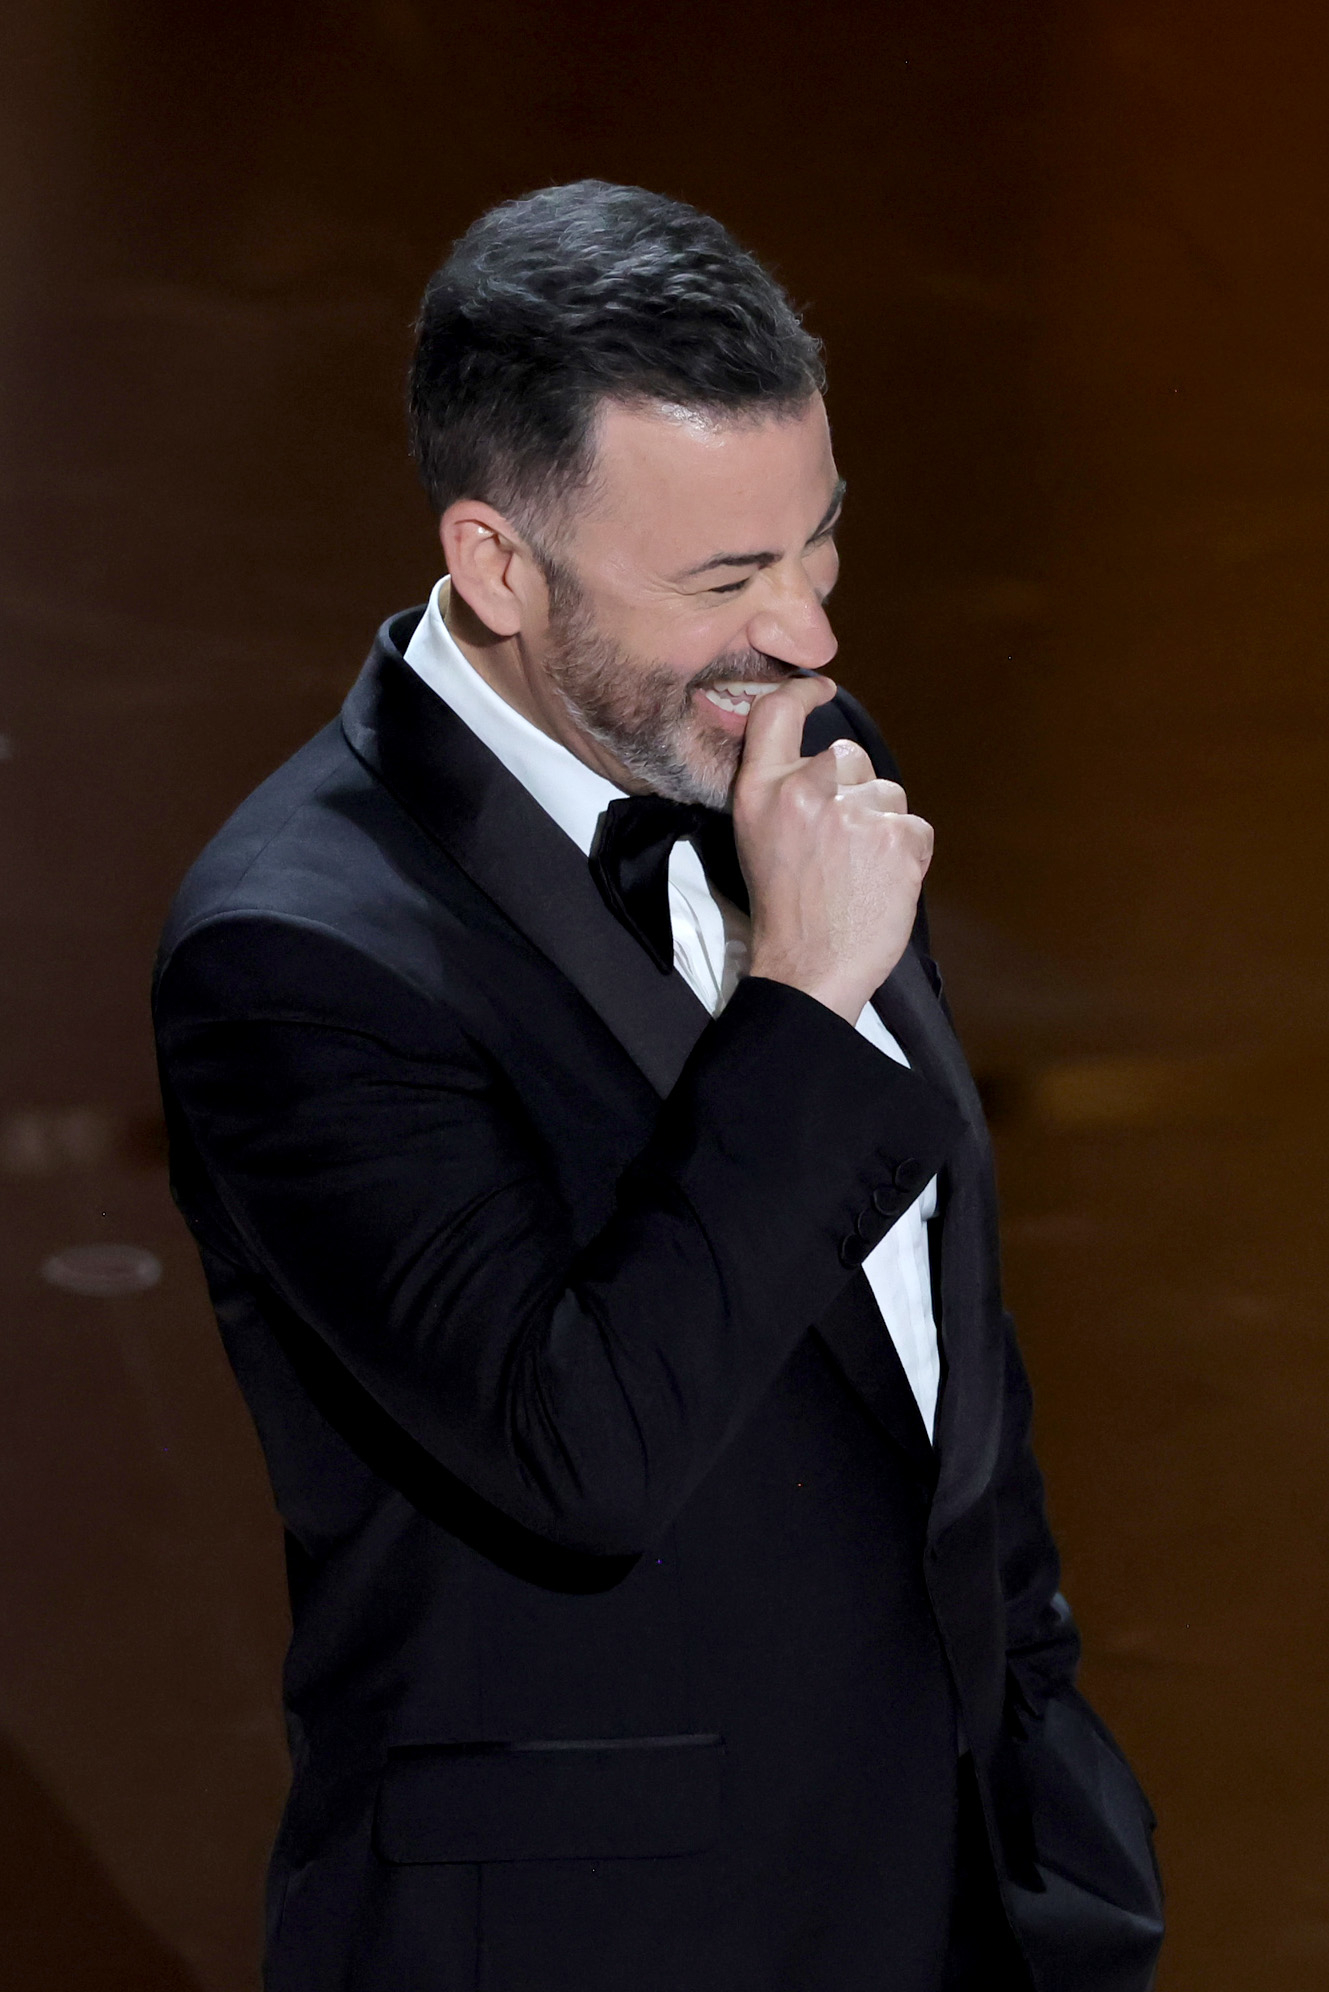 Closeup of Jimmy Kimmel hosting the Oscars